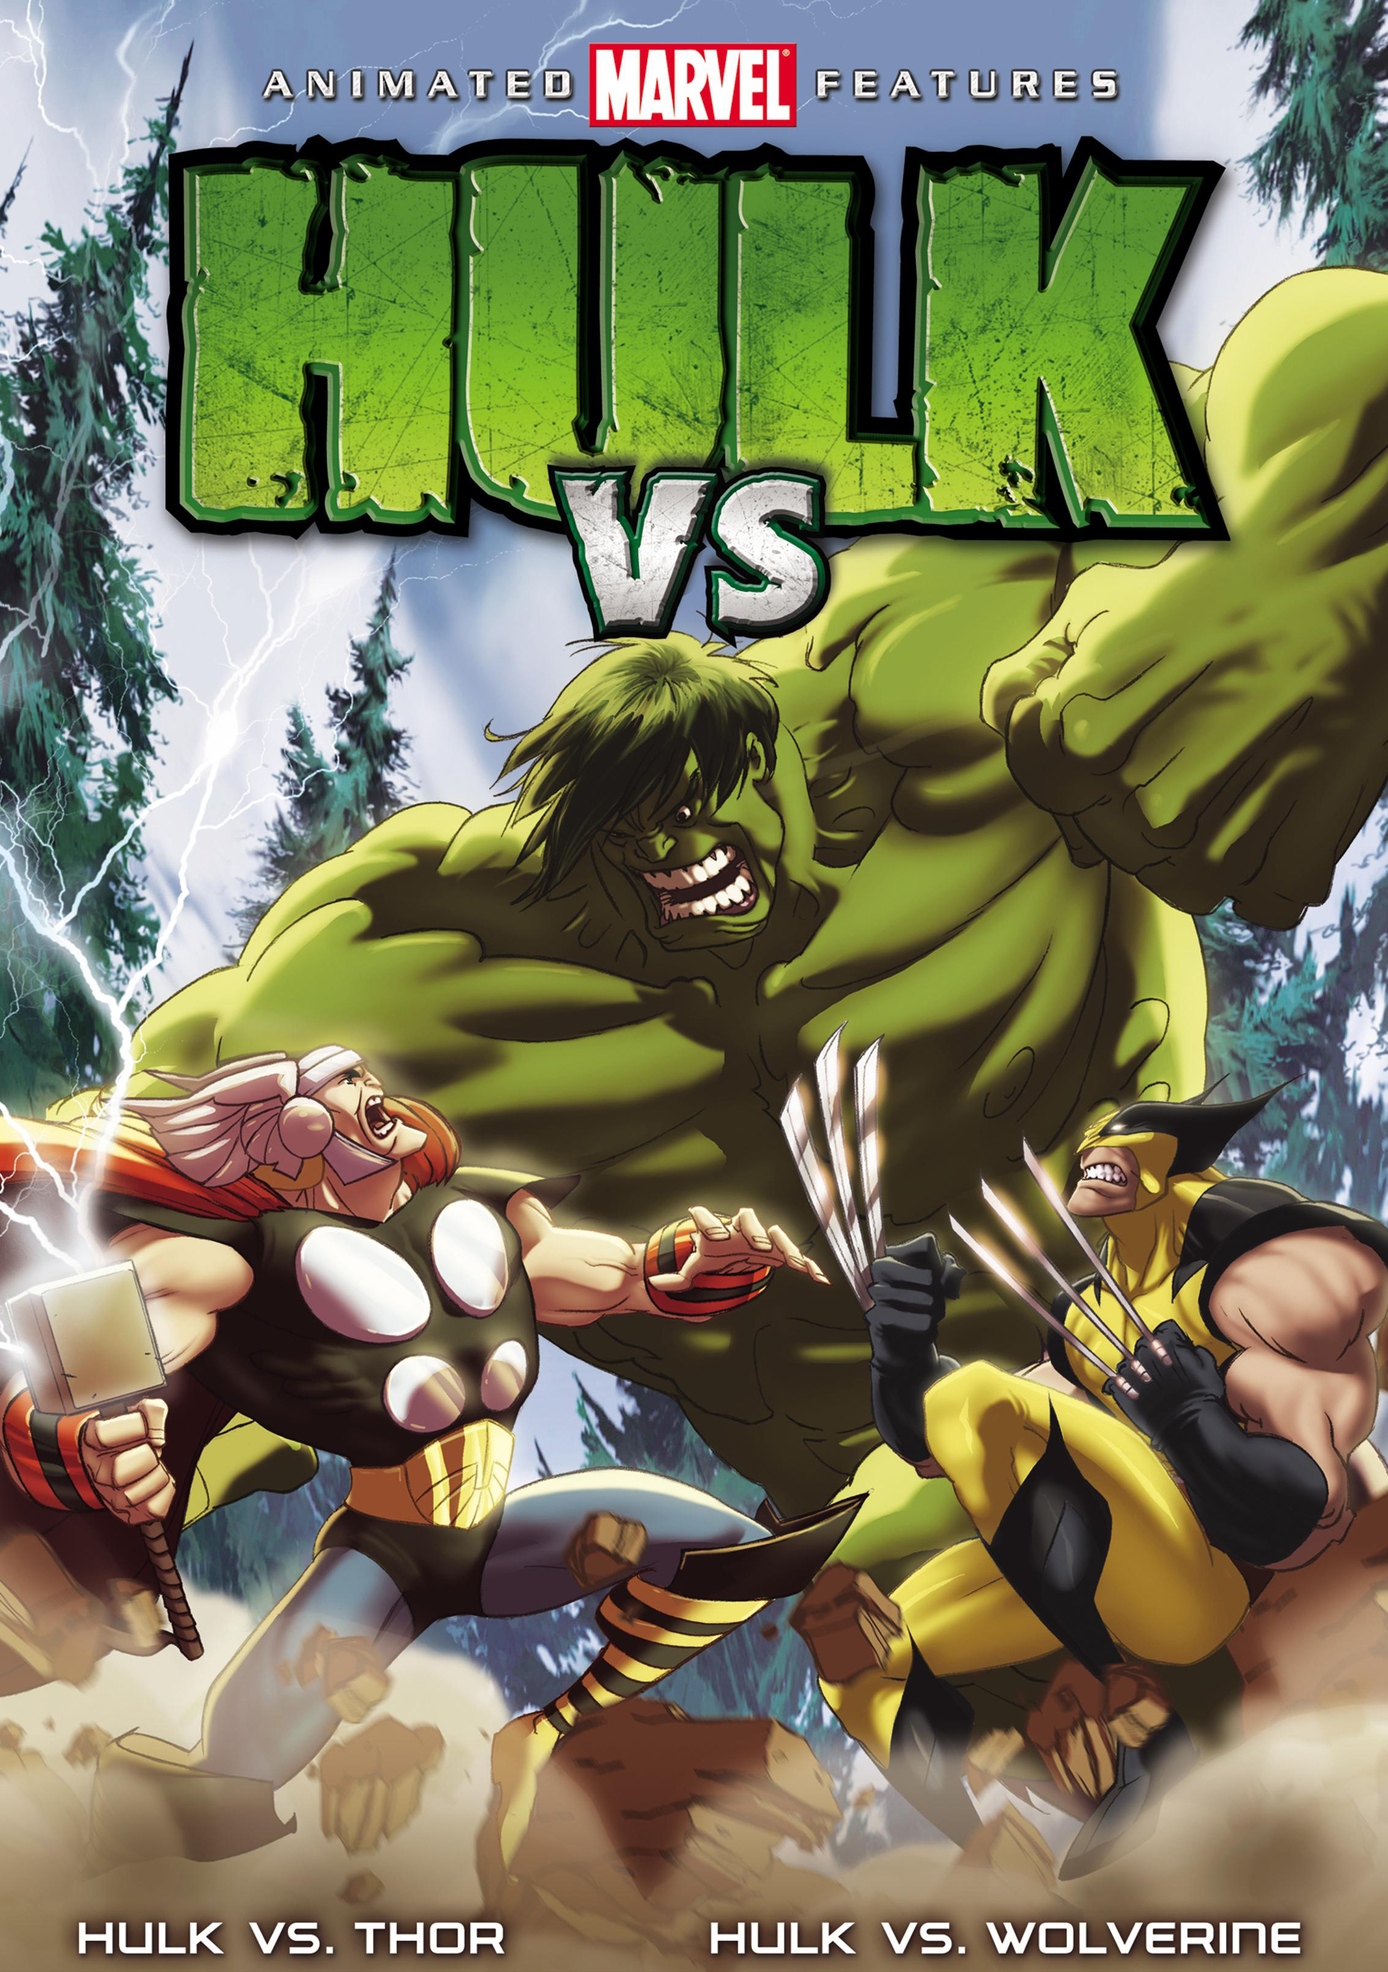 Hulk VS (2009)